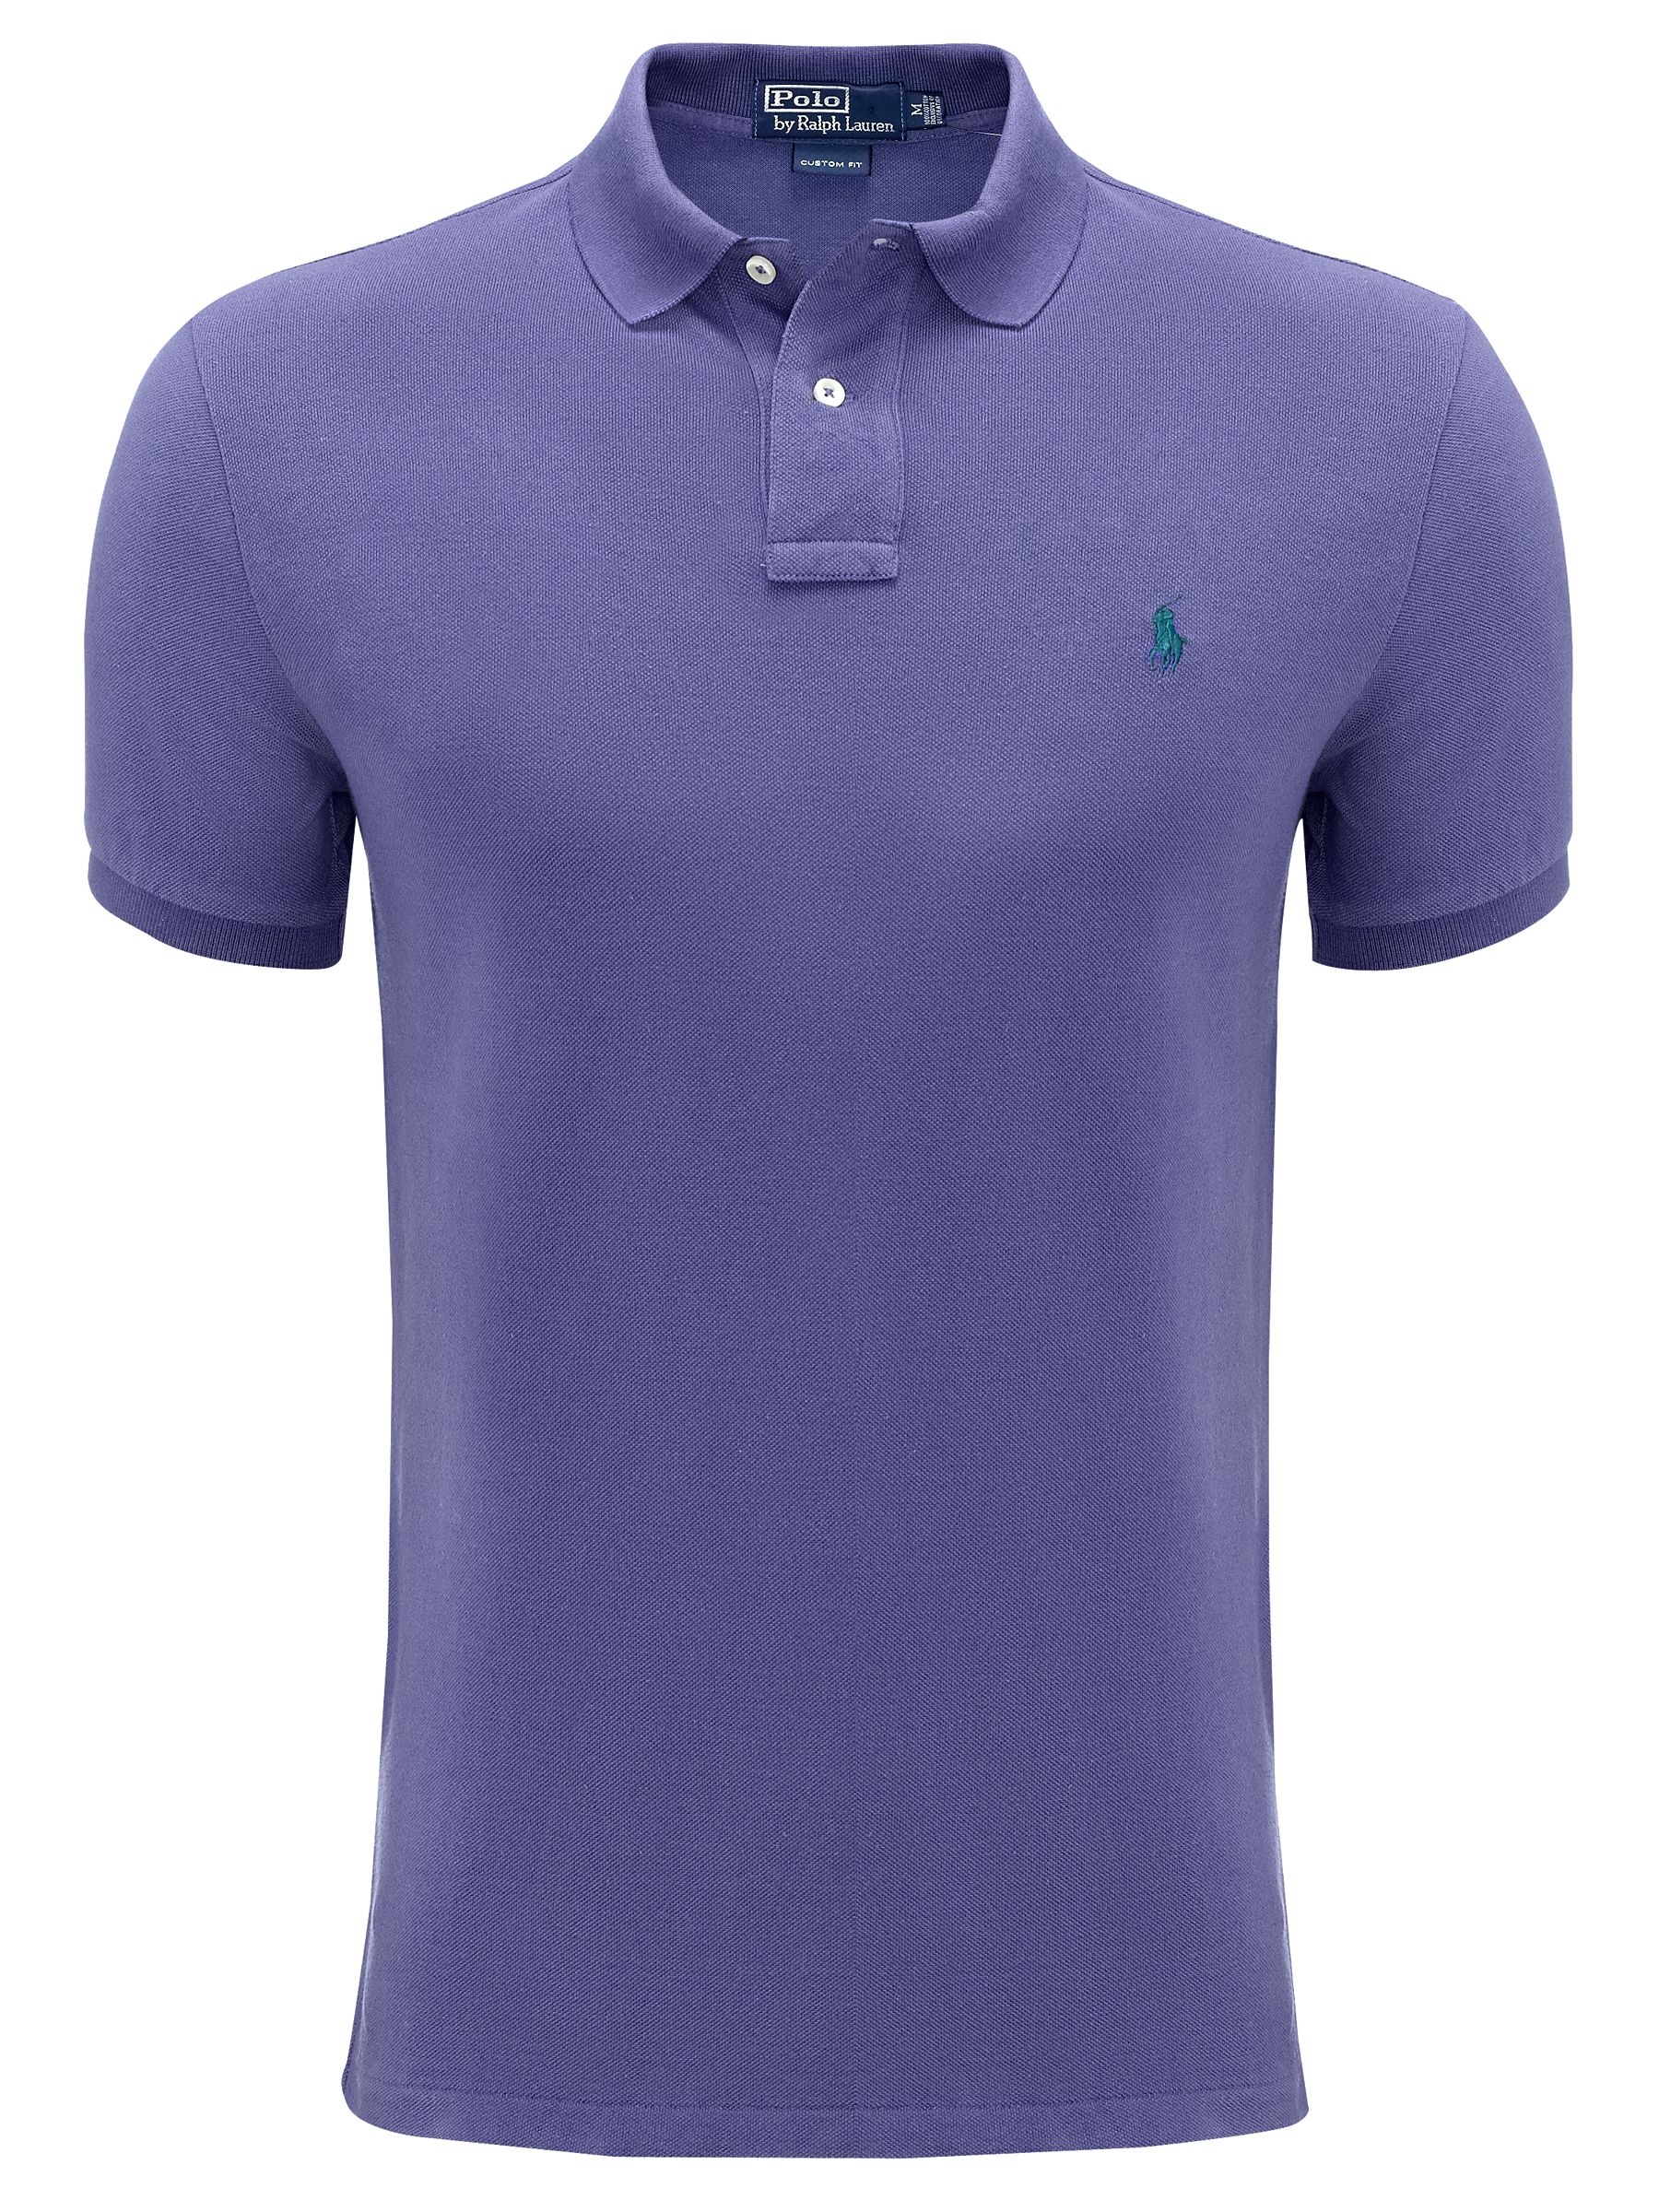 Buy Polo Ralph Lauren Custom Fit Polo Shirt, Juneberry online at 